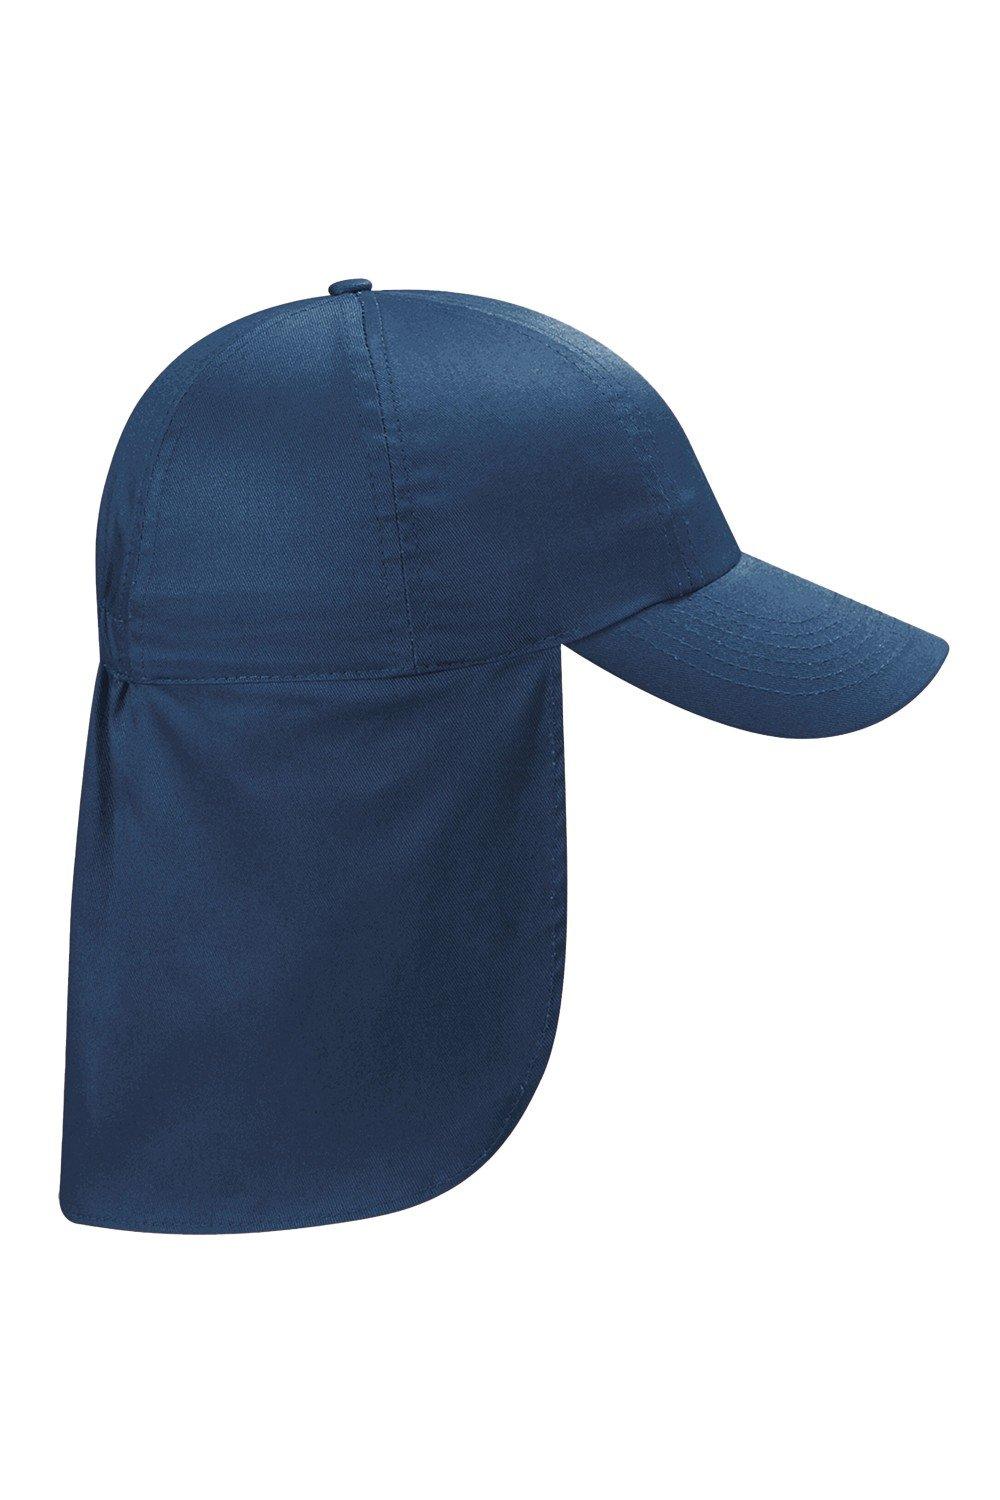 Шляпа легионера Beechfield, темно-синий